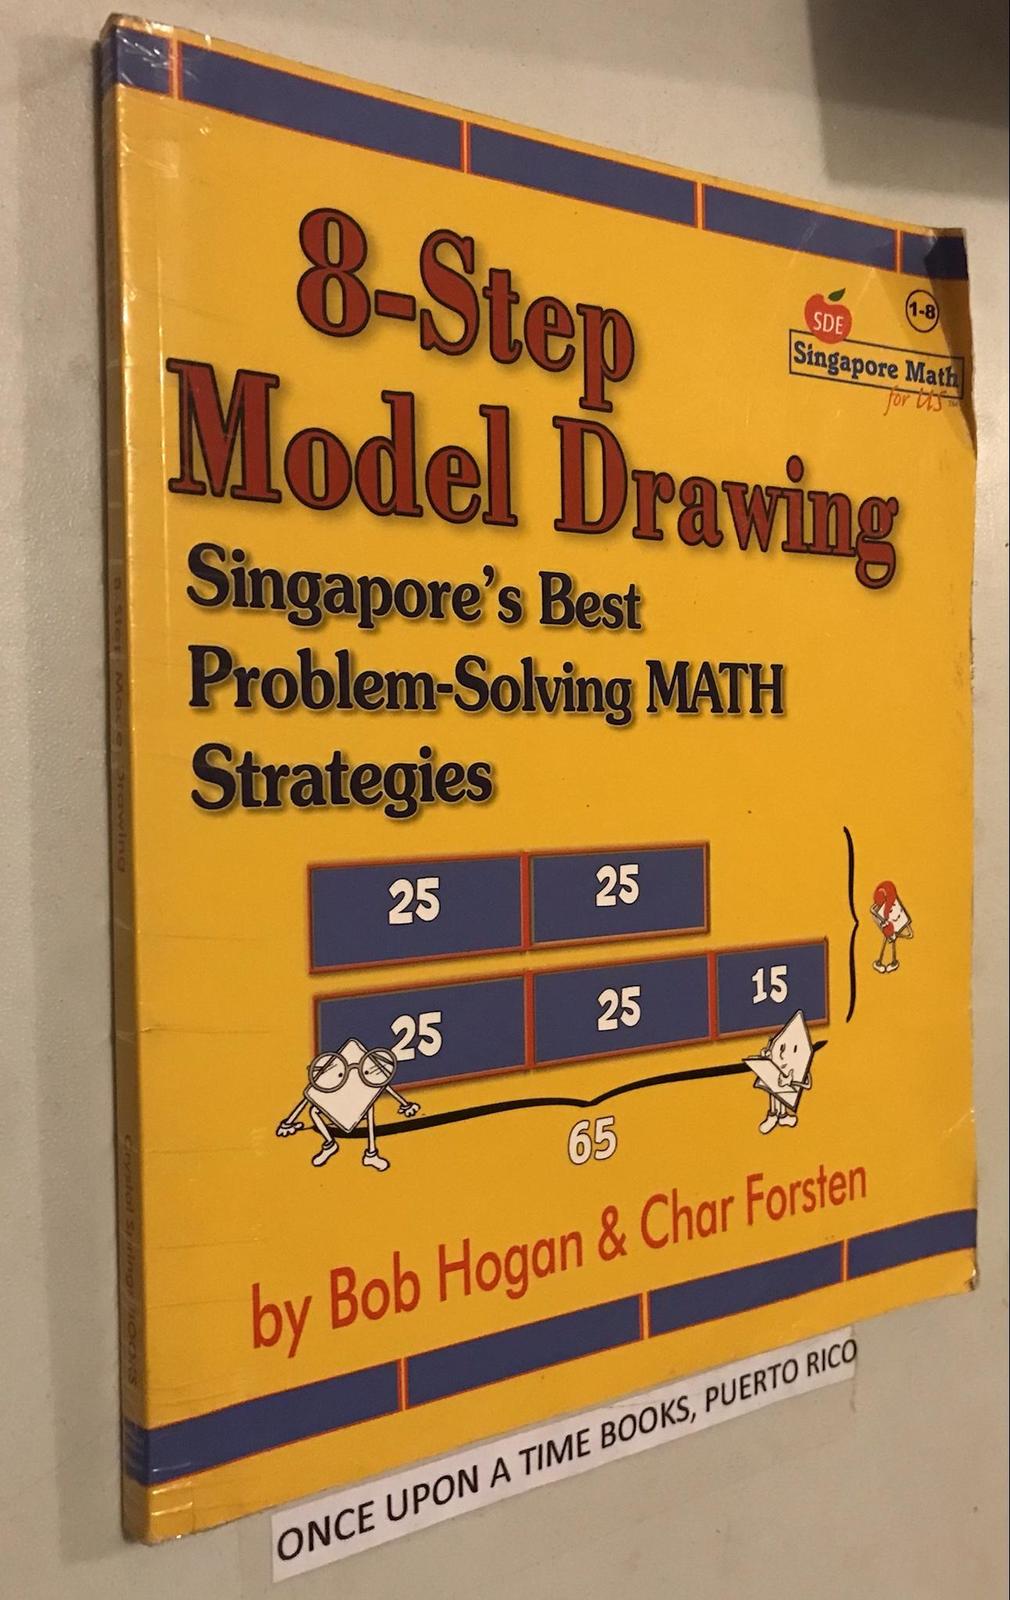 8 step model drawing singapore's best problem solving math strategies